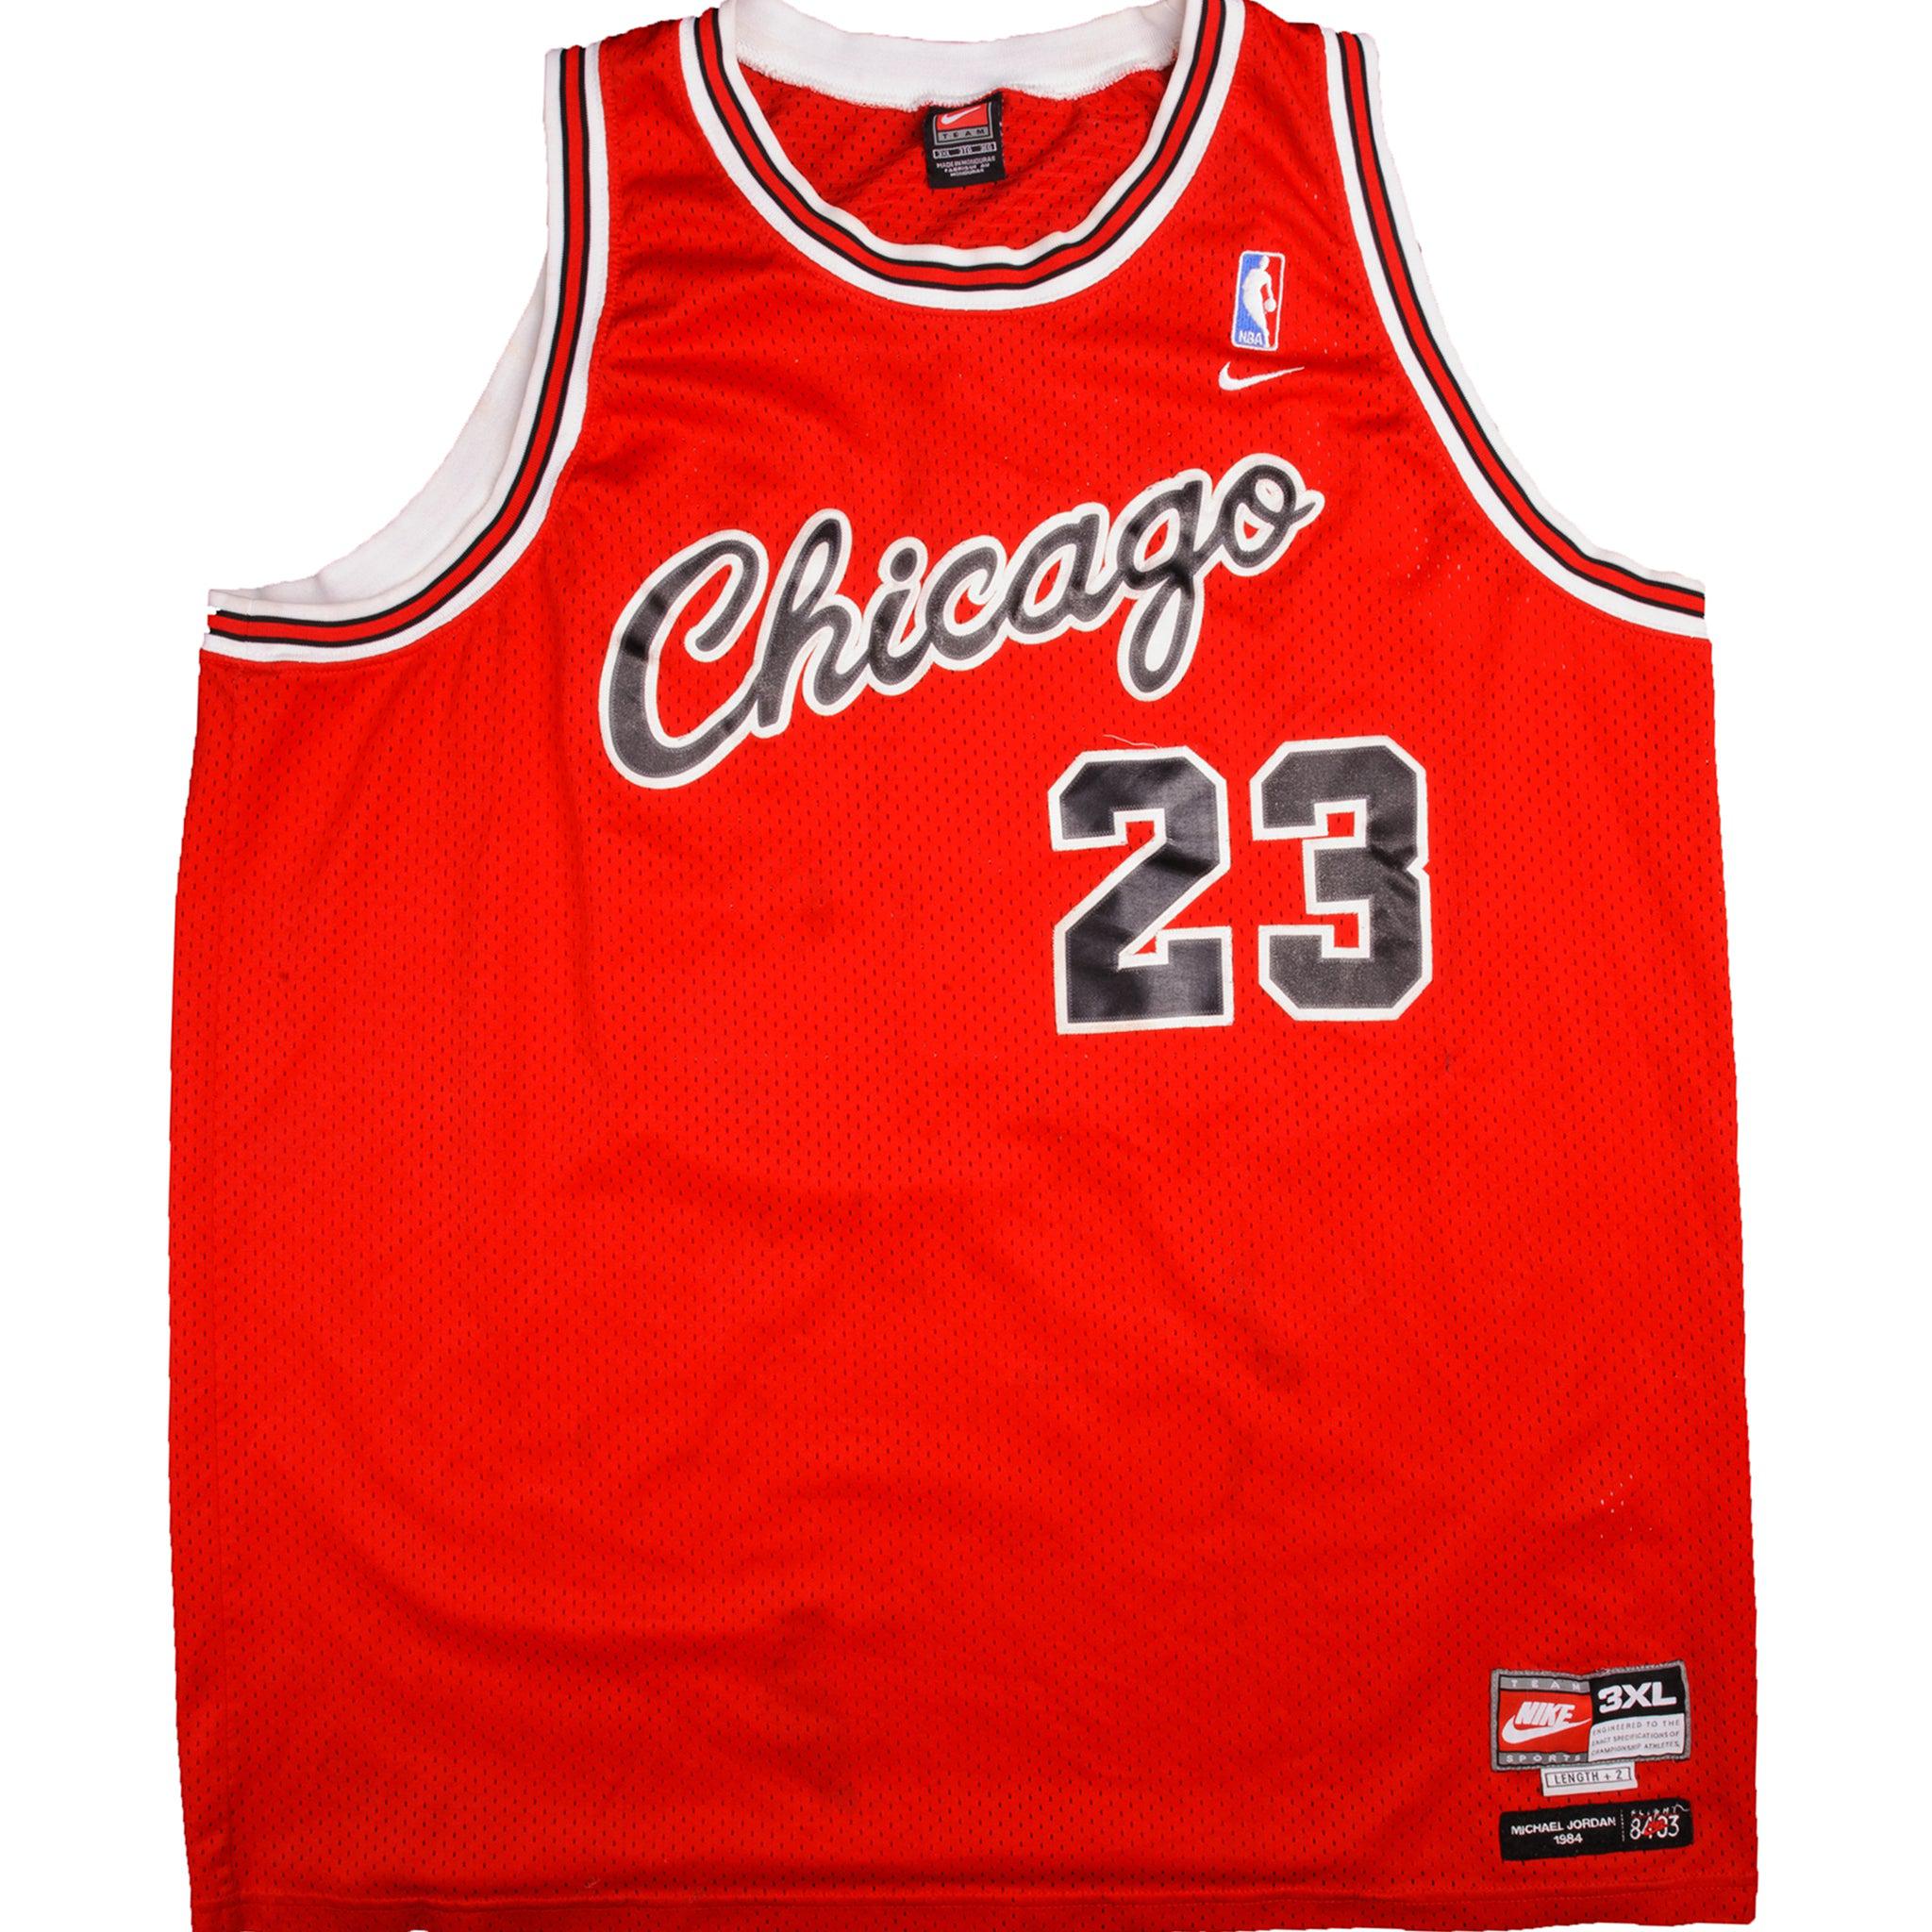 Michael Jordan Bulls Jersey - Michael Jordan Chicago Bulls Jersey